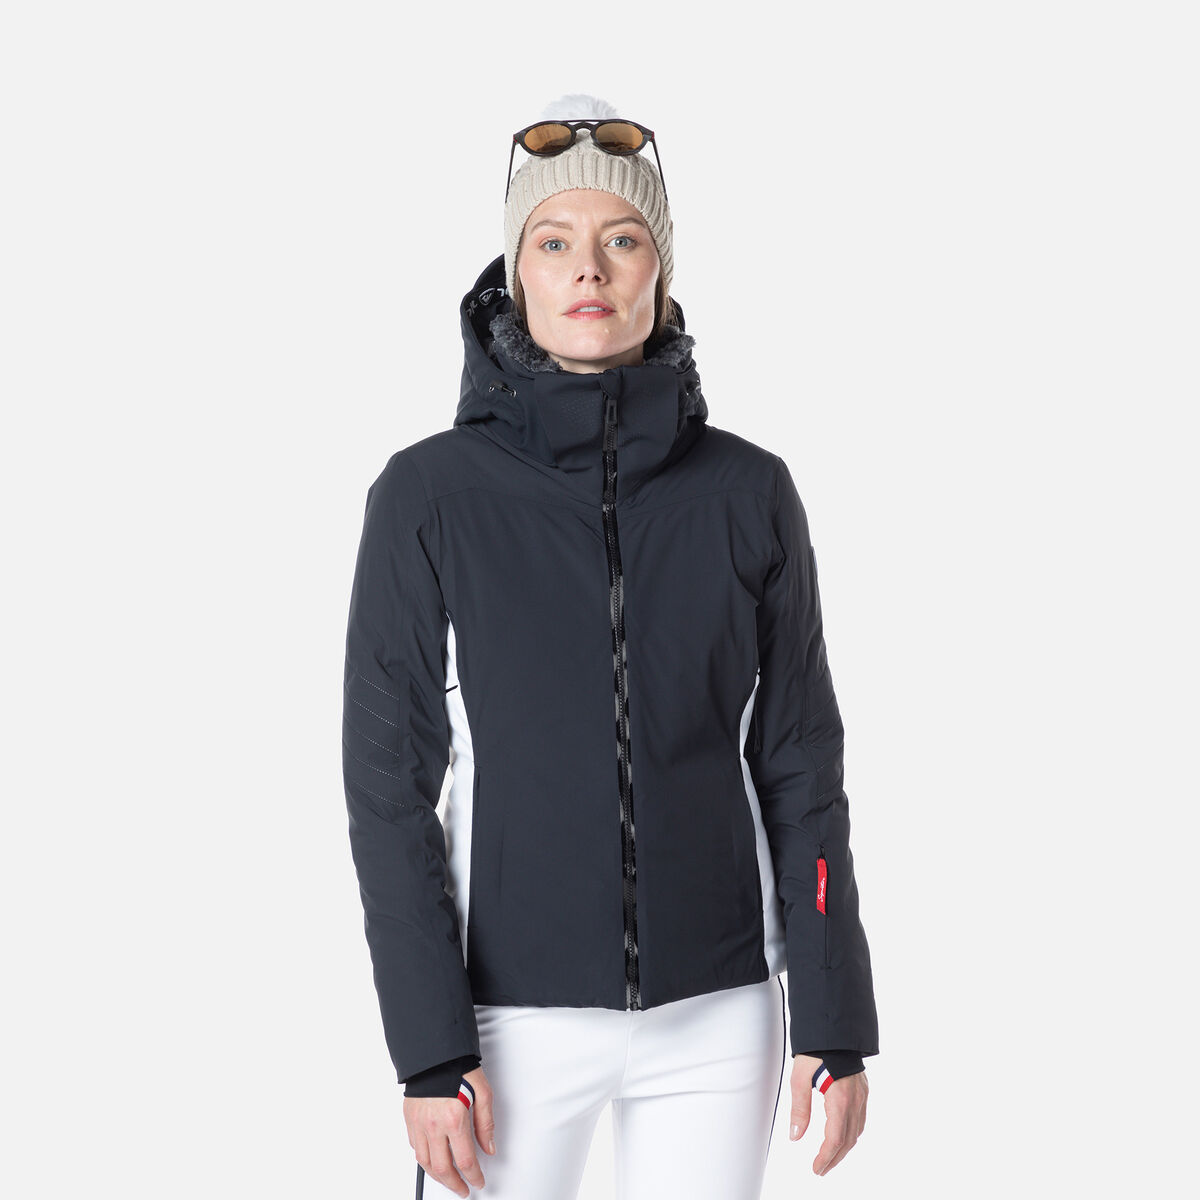 Rossignol Women's Strato Ski Jacket Black